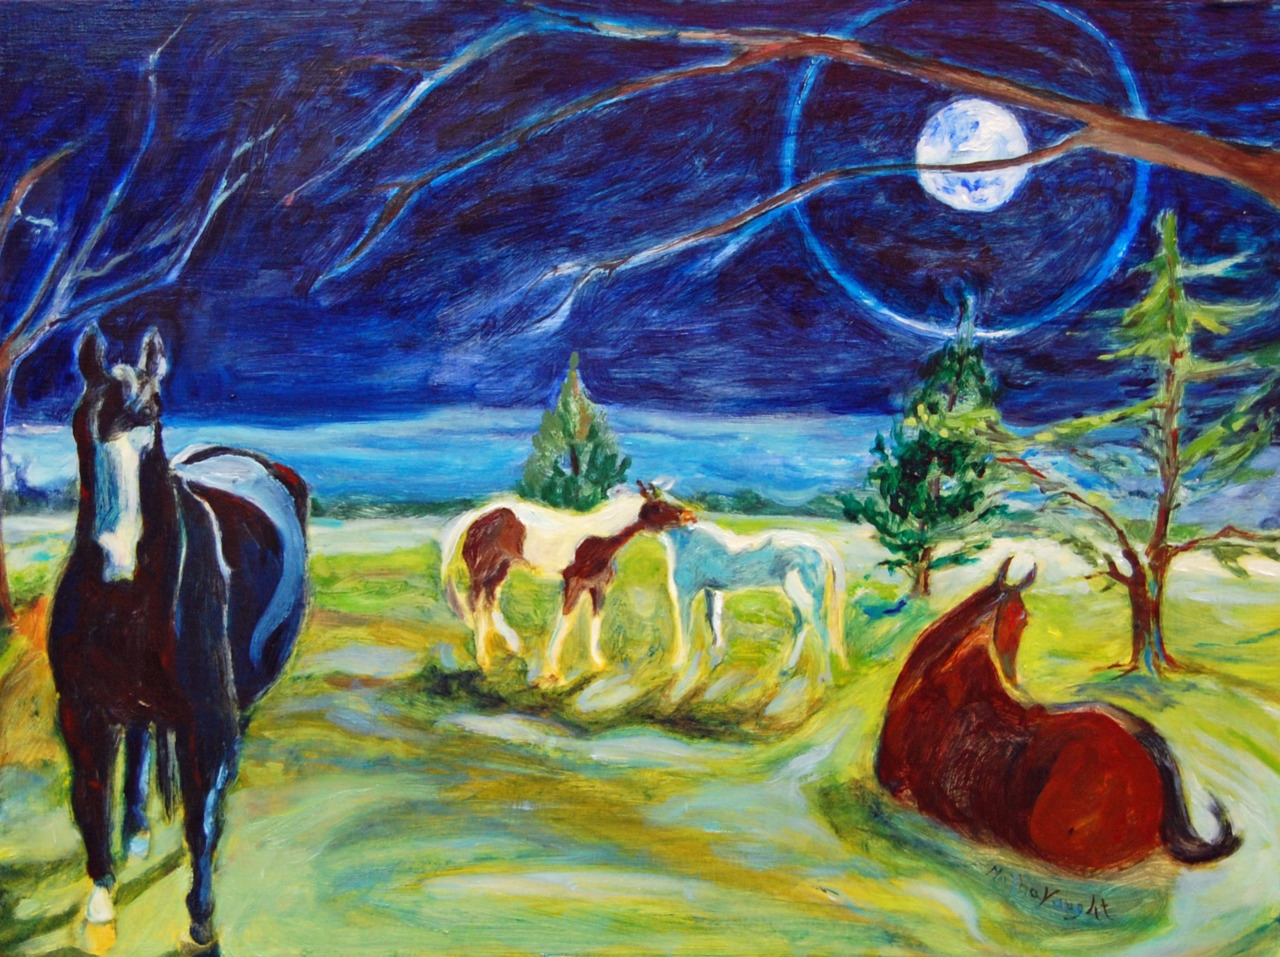 Equine Nocturne by Martha Lindenborg Vaught oil on panel Oct 2011